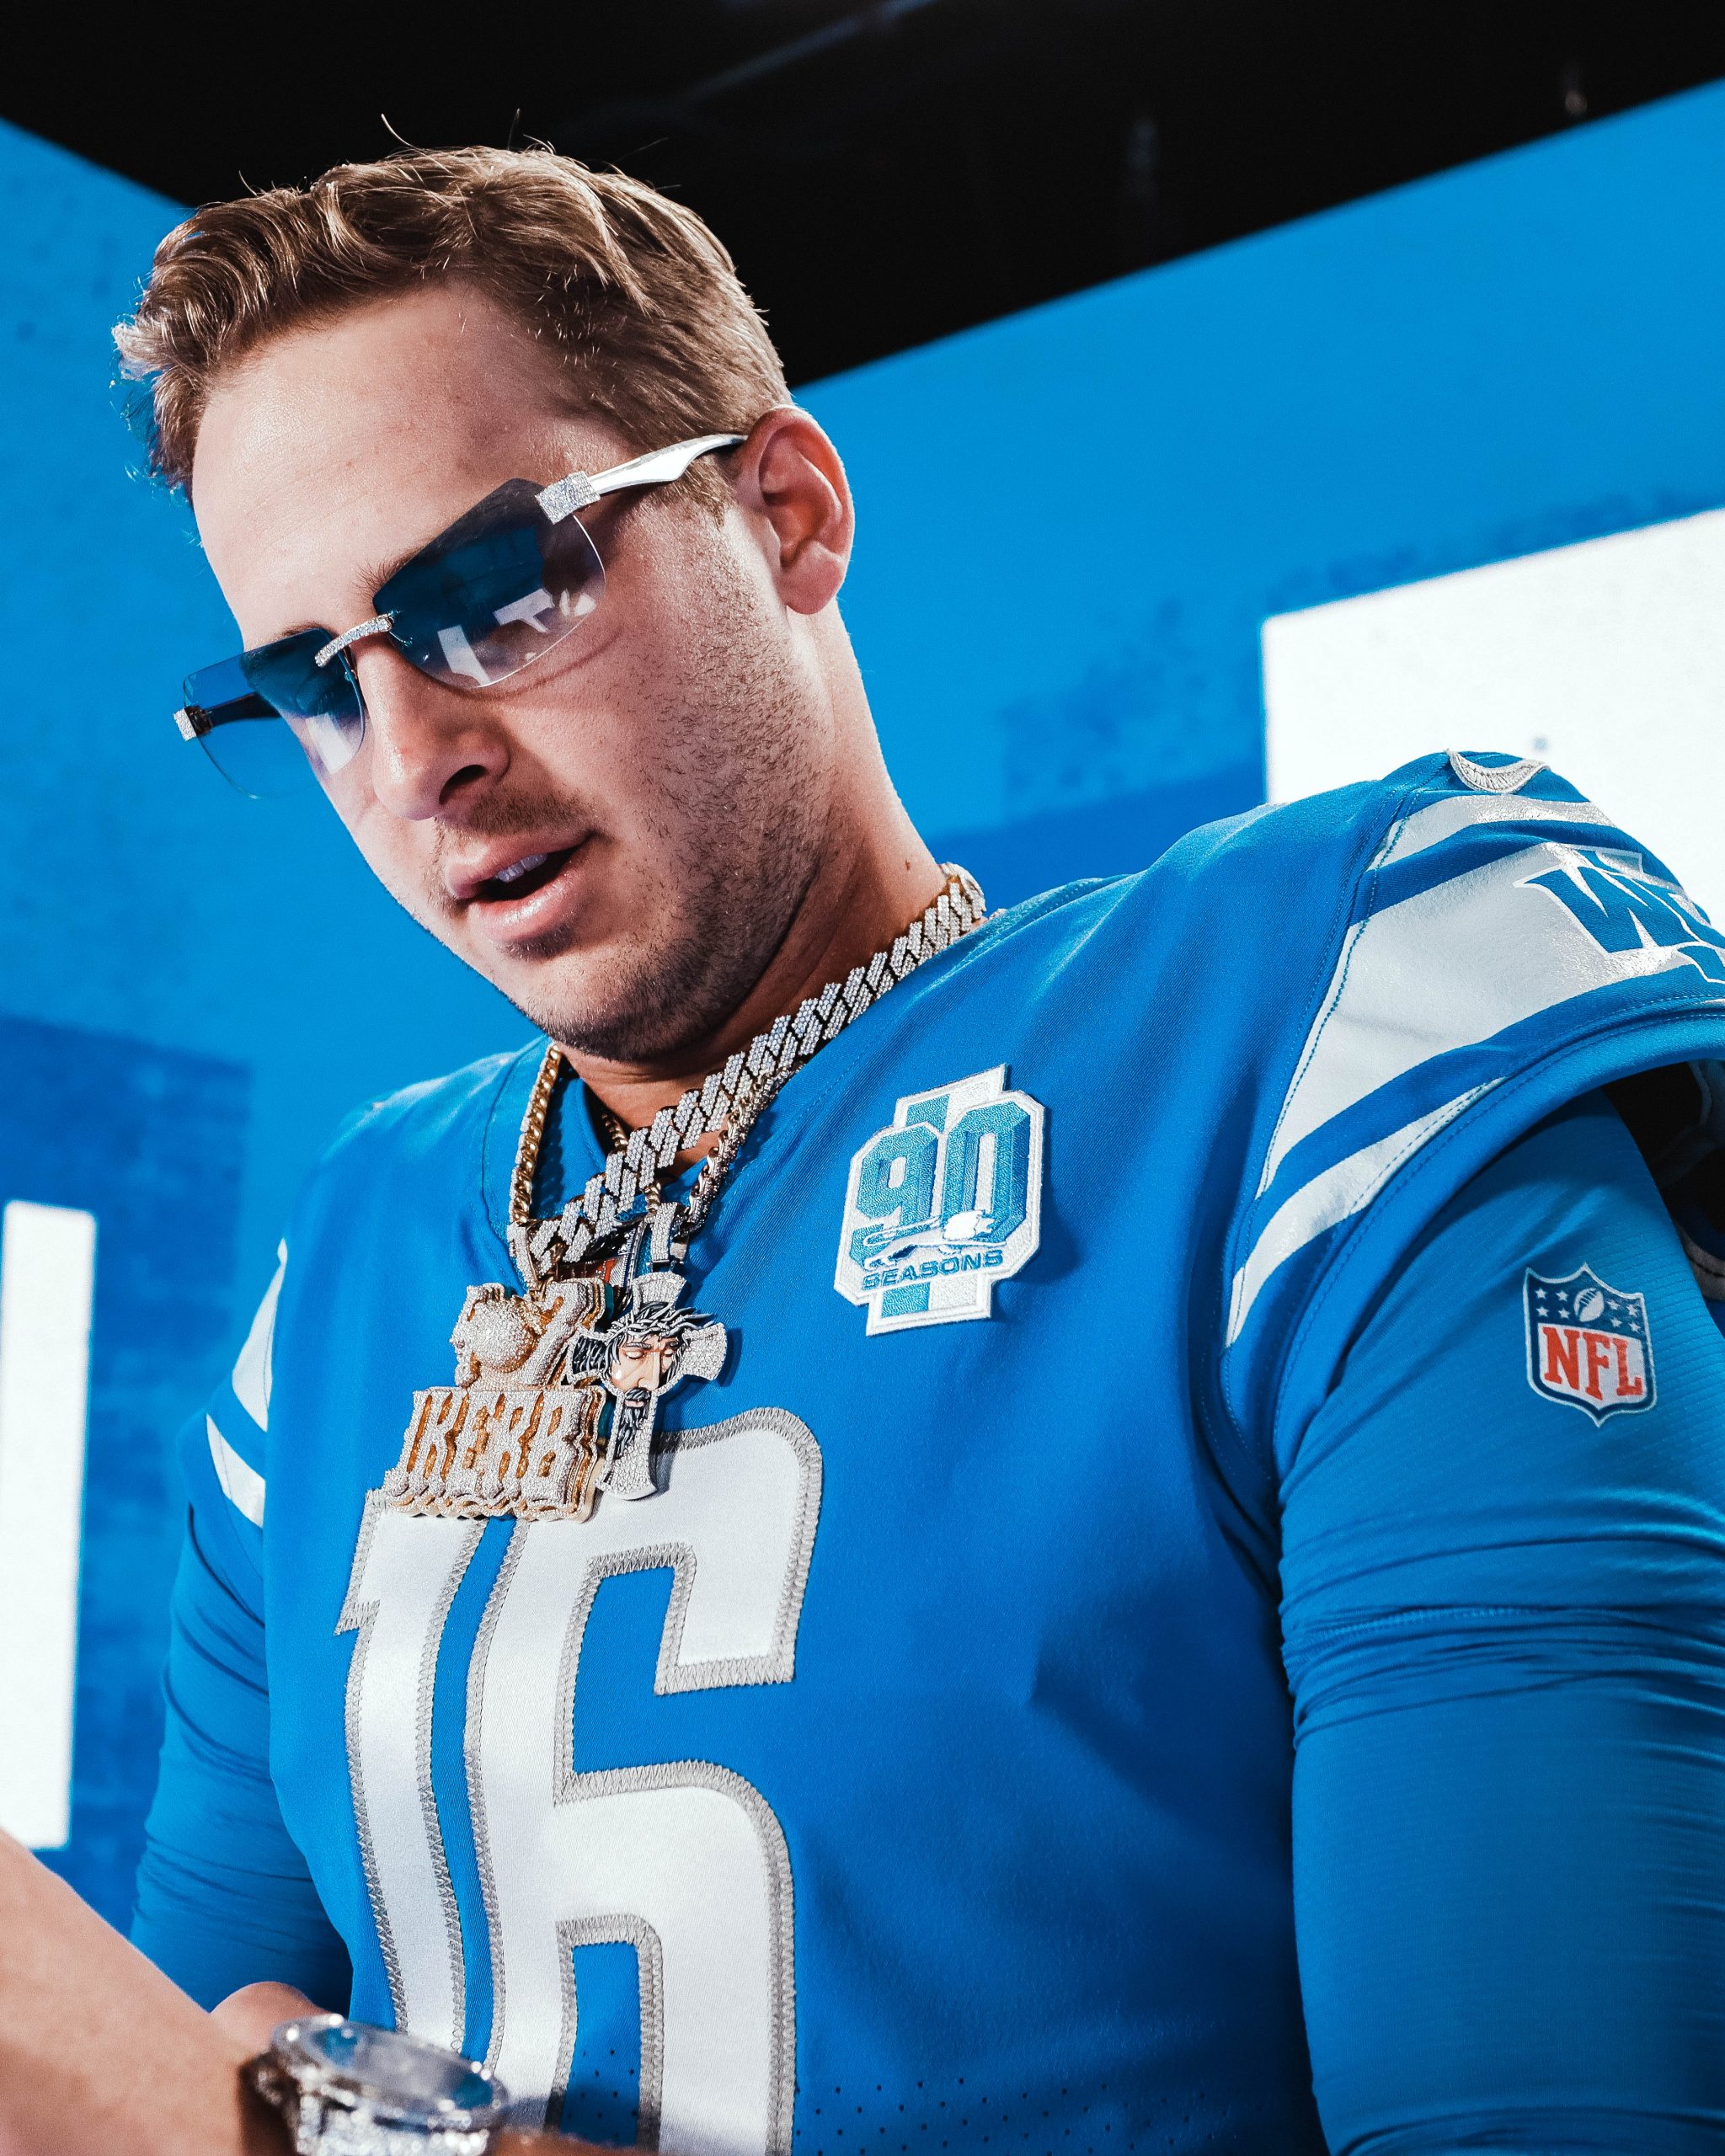 Close up of Lions quarterback Jared Goff in uniform and sunglasses